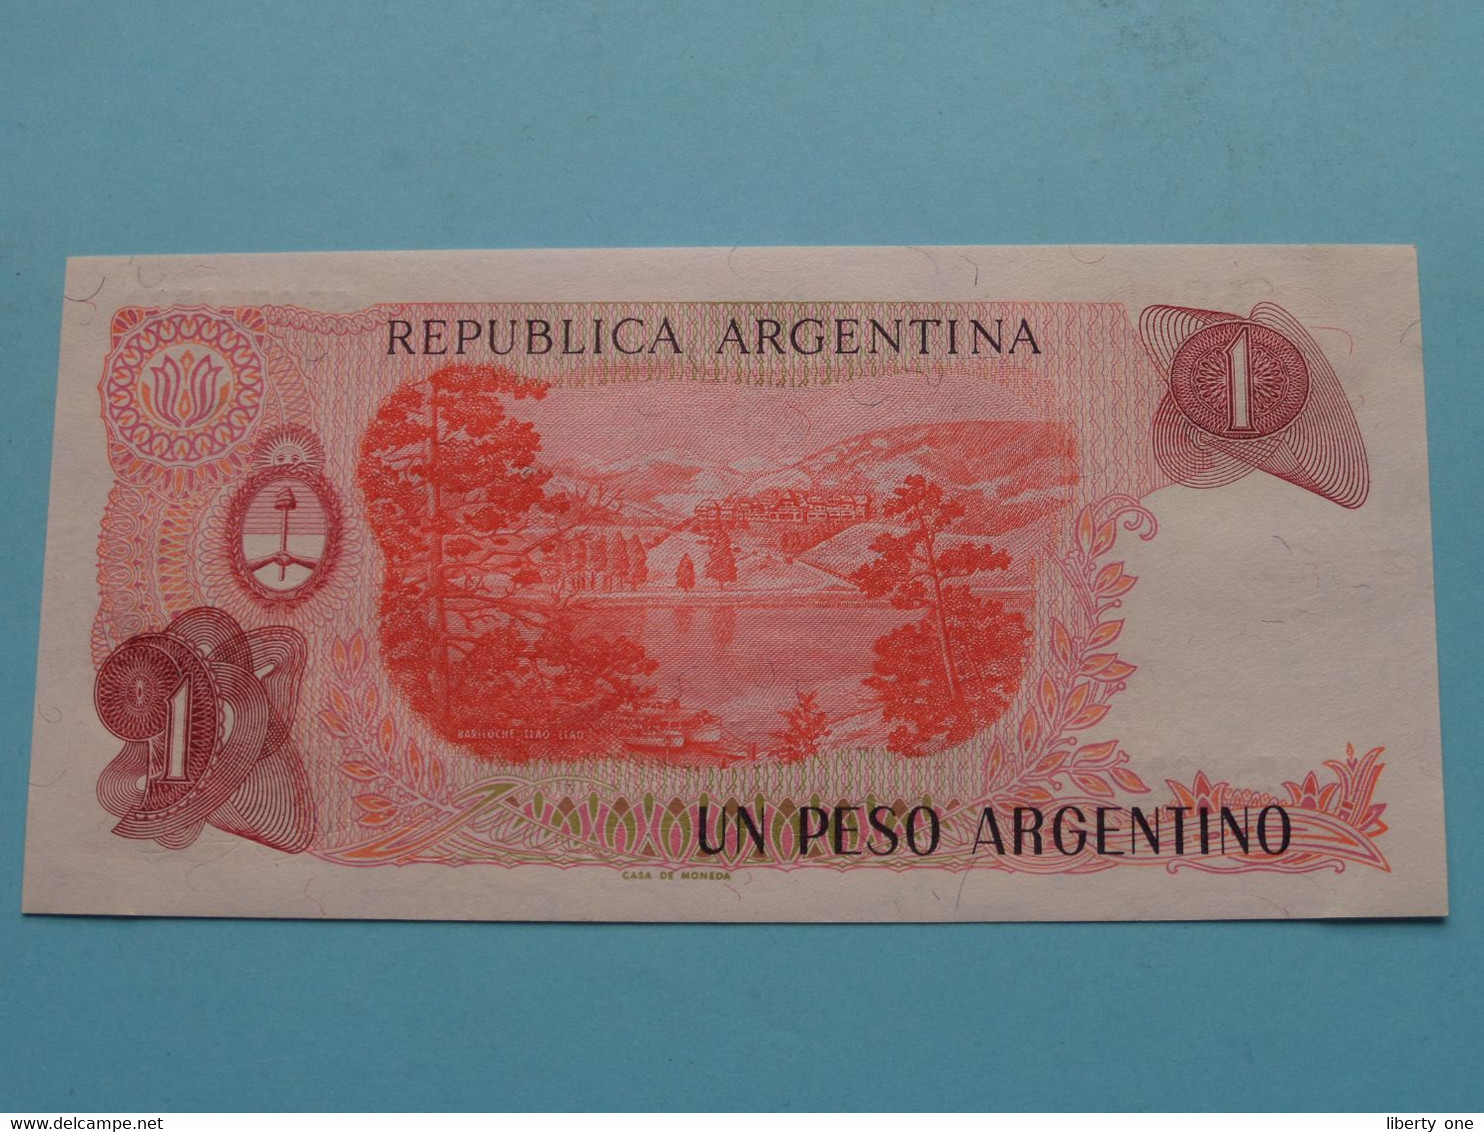 1 PESO Un ( 95.375.828A ) Banco Central De La Republica Argentina ( Voir / See > Scans ) UNC ! - Argentina